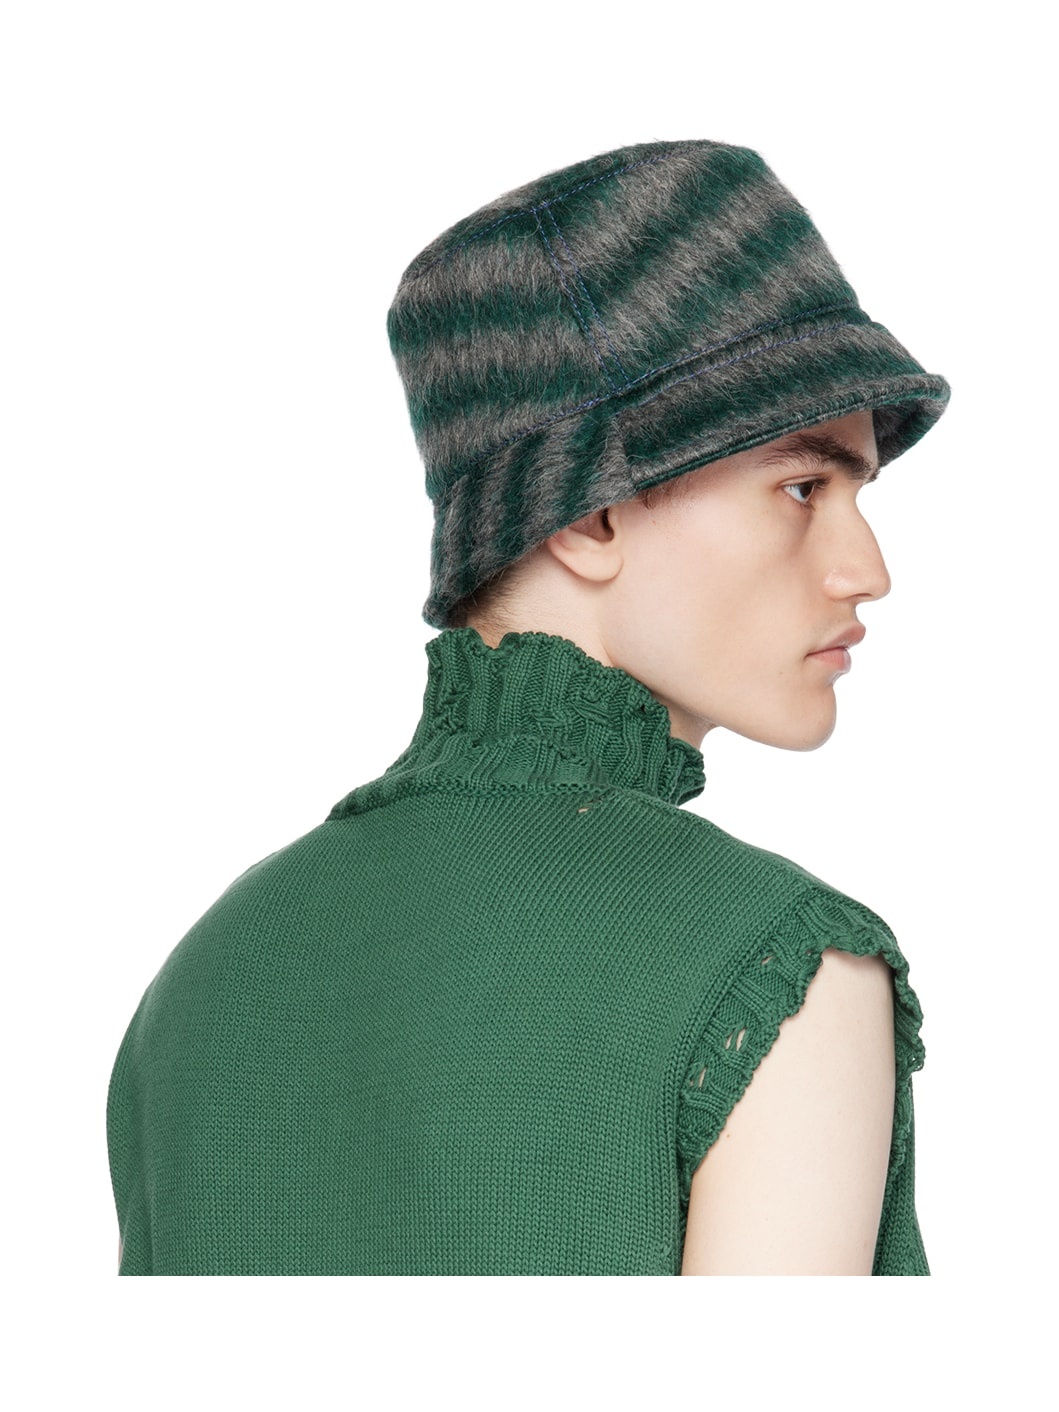 Green & Gray Striped Bucket Hat - 3